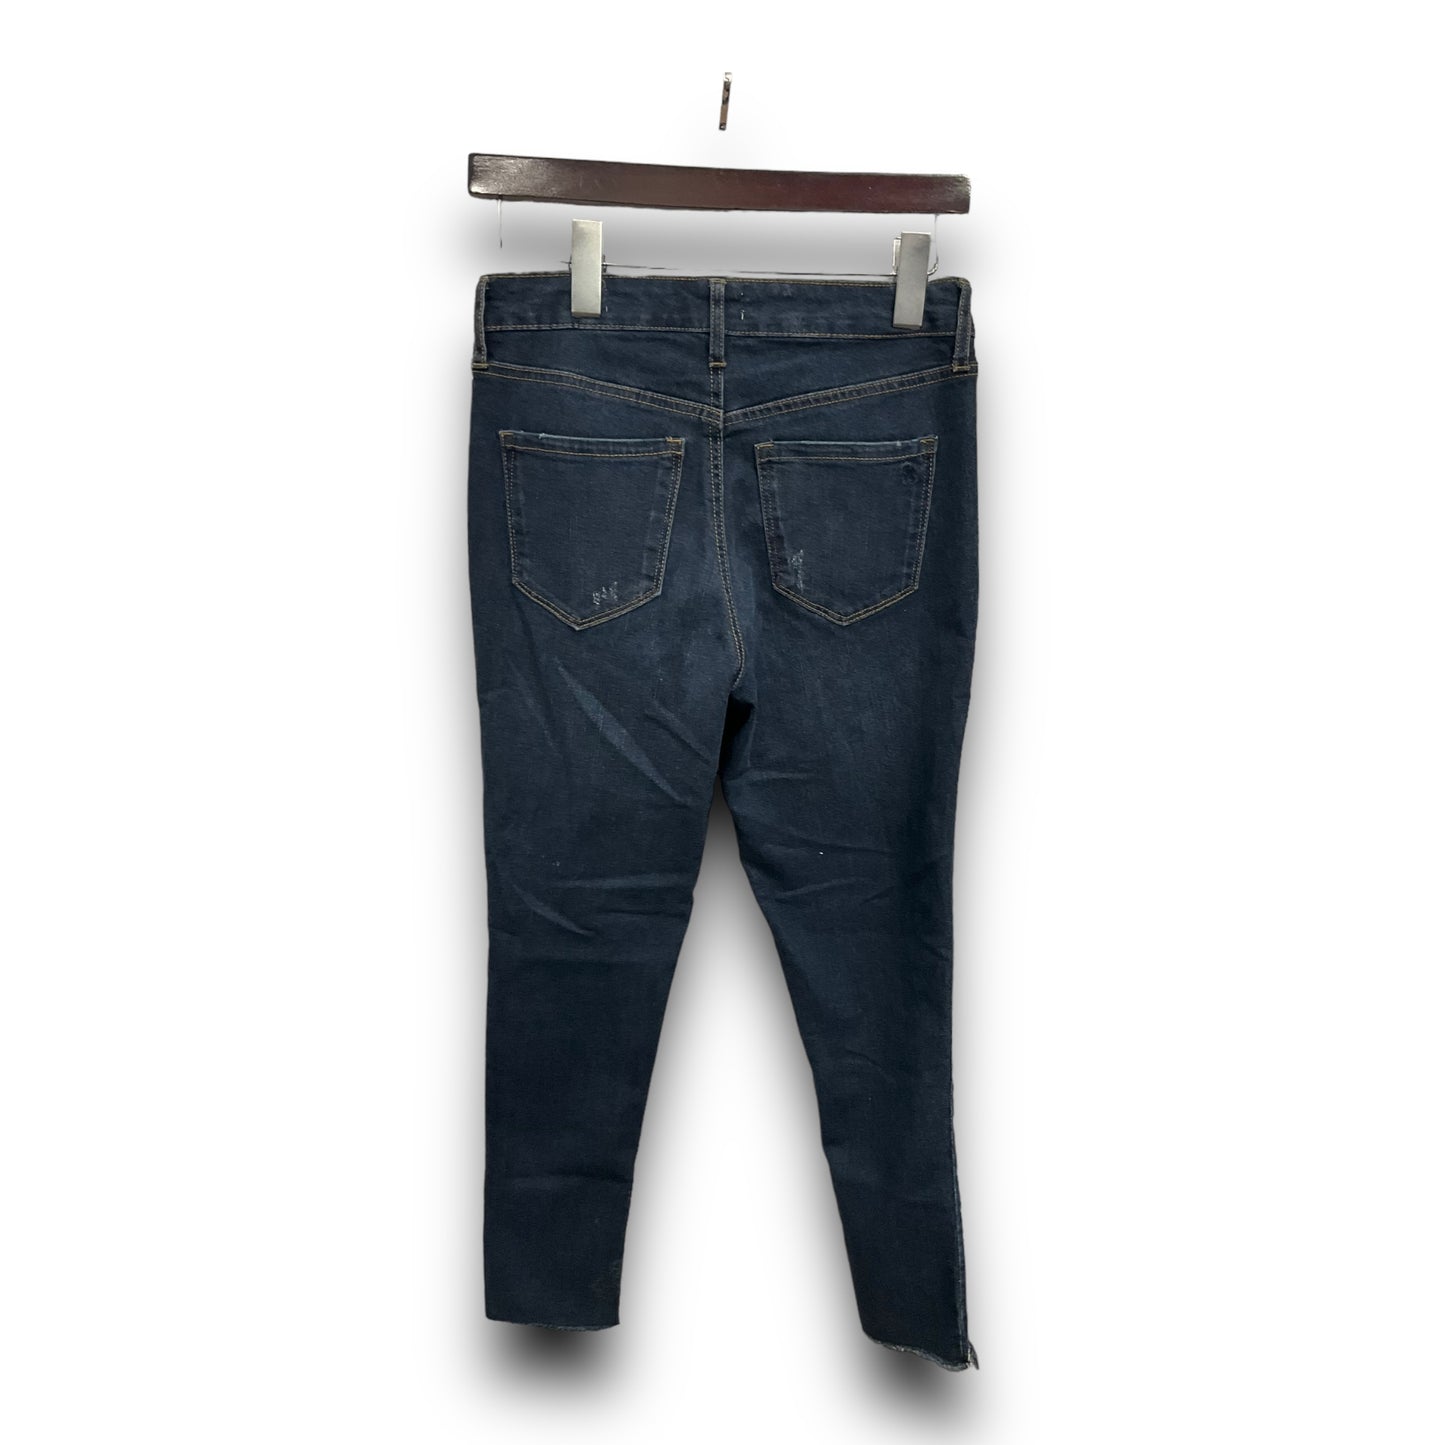 Jeans Skinny By Jessica Simpson  Size: 4